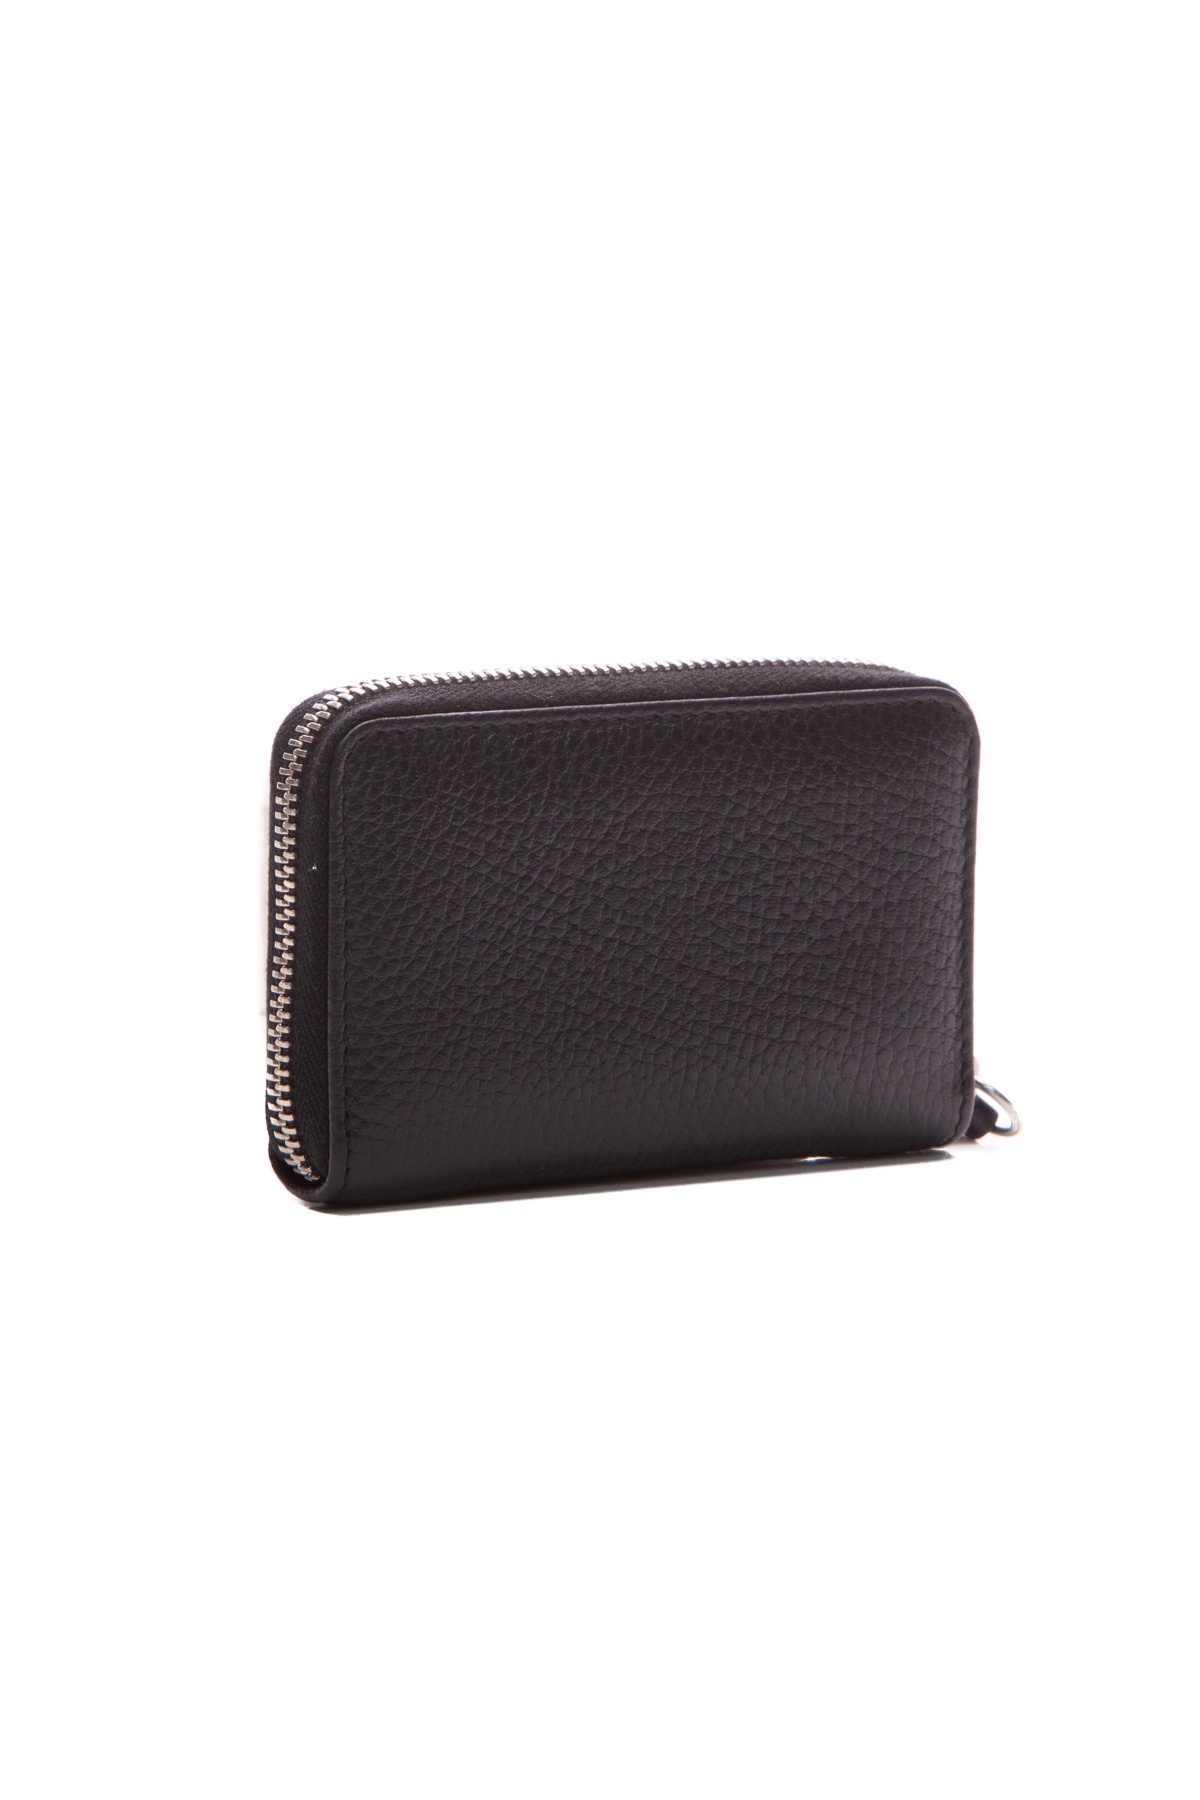 Gucci Black Marmont Zip Wallet